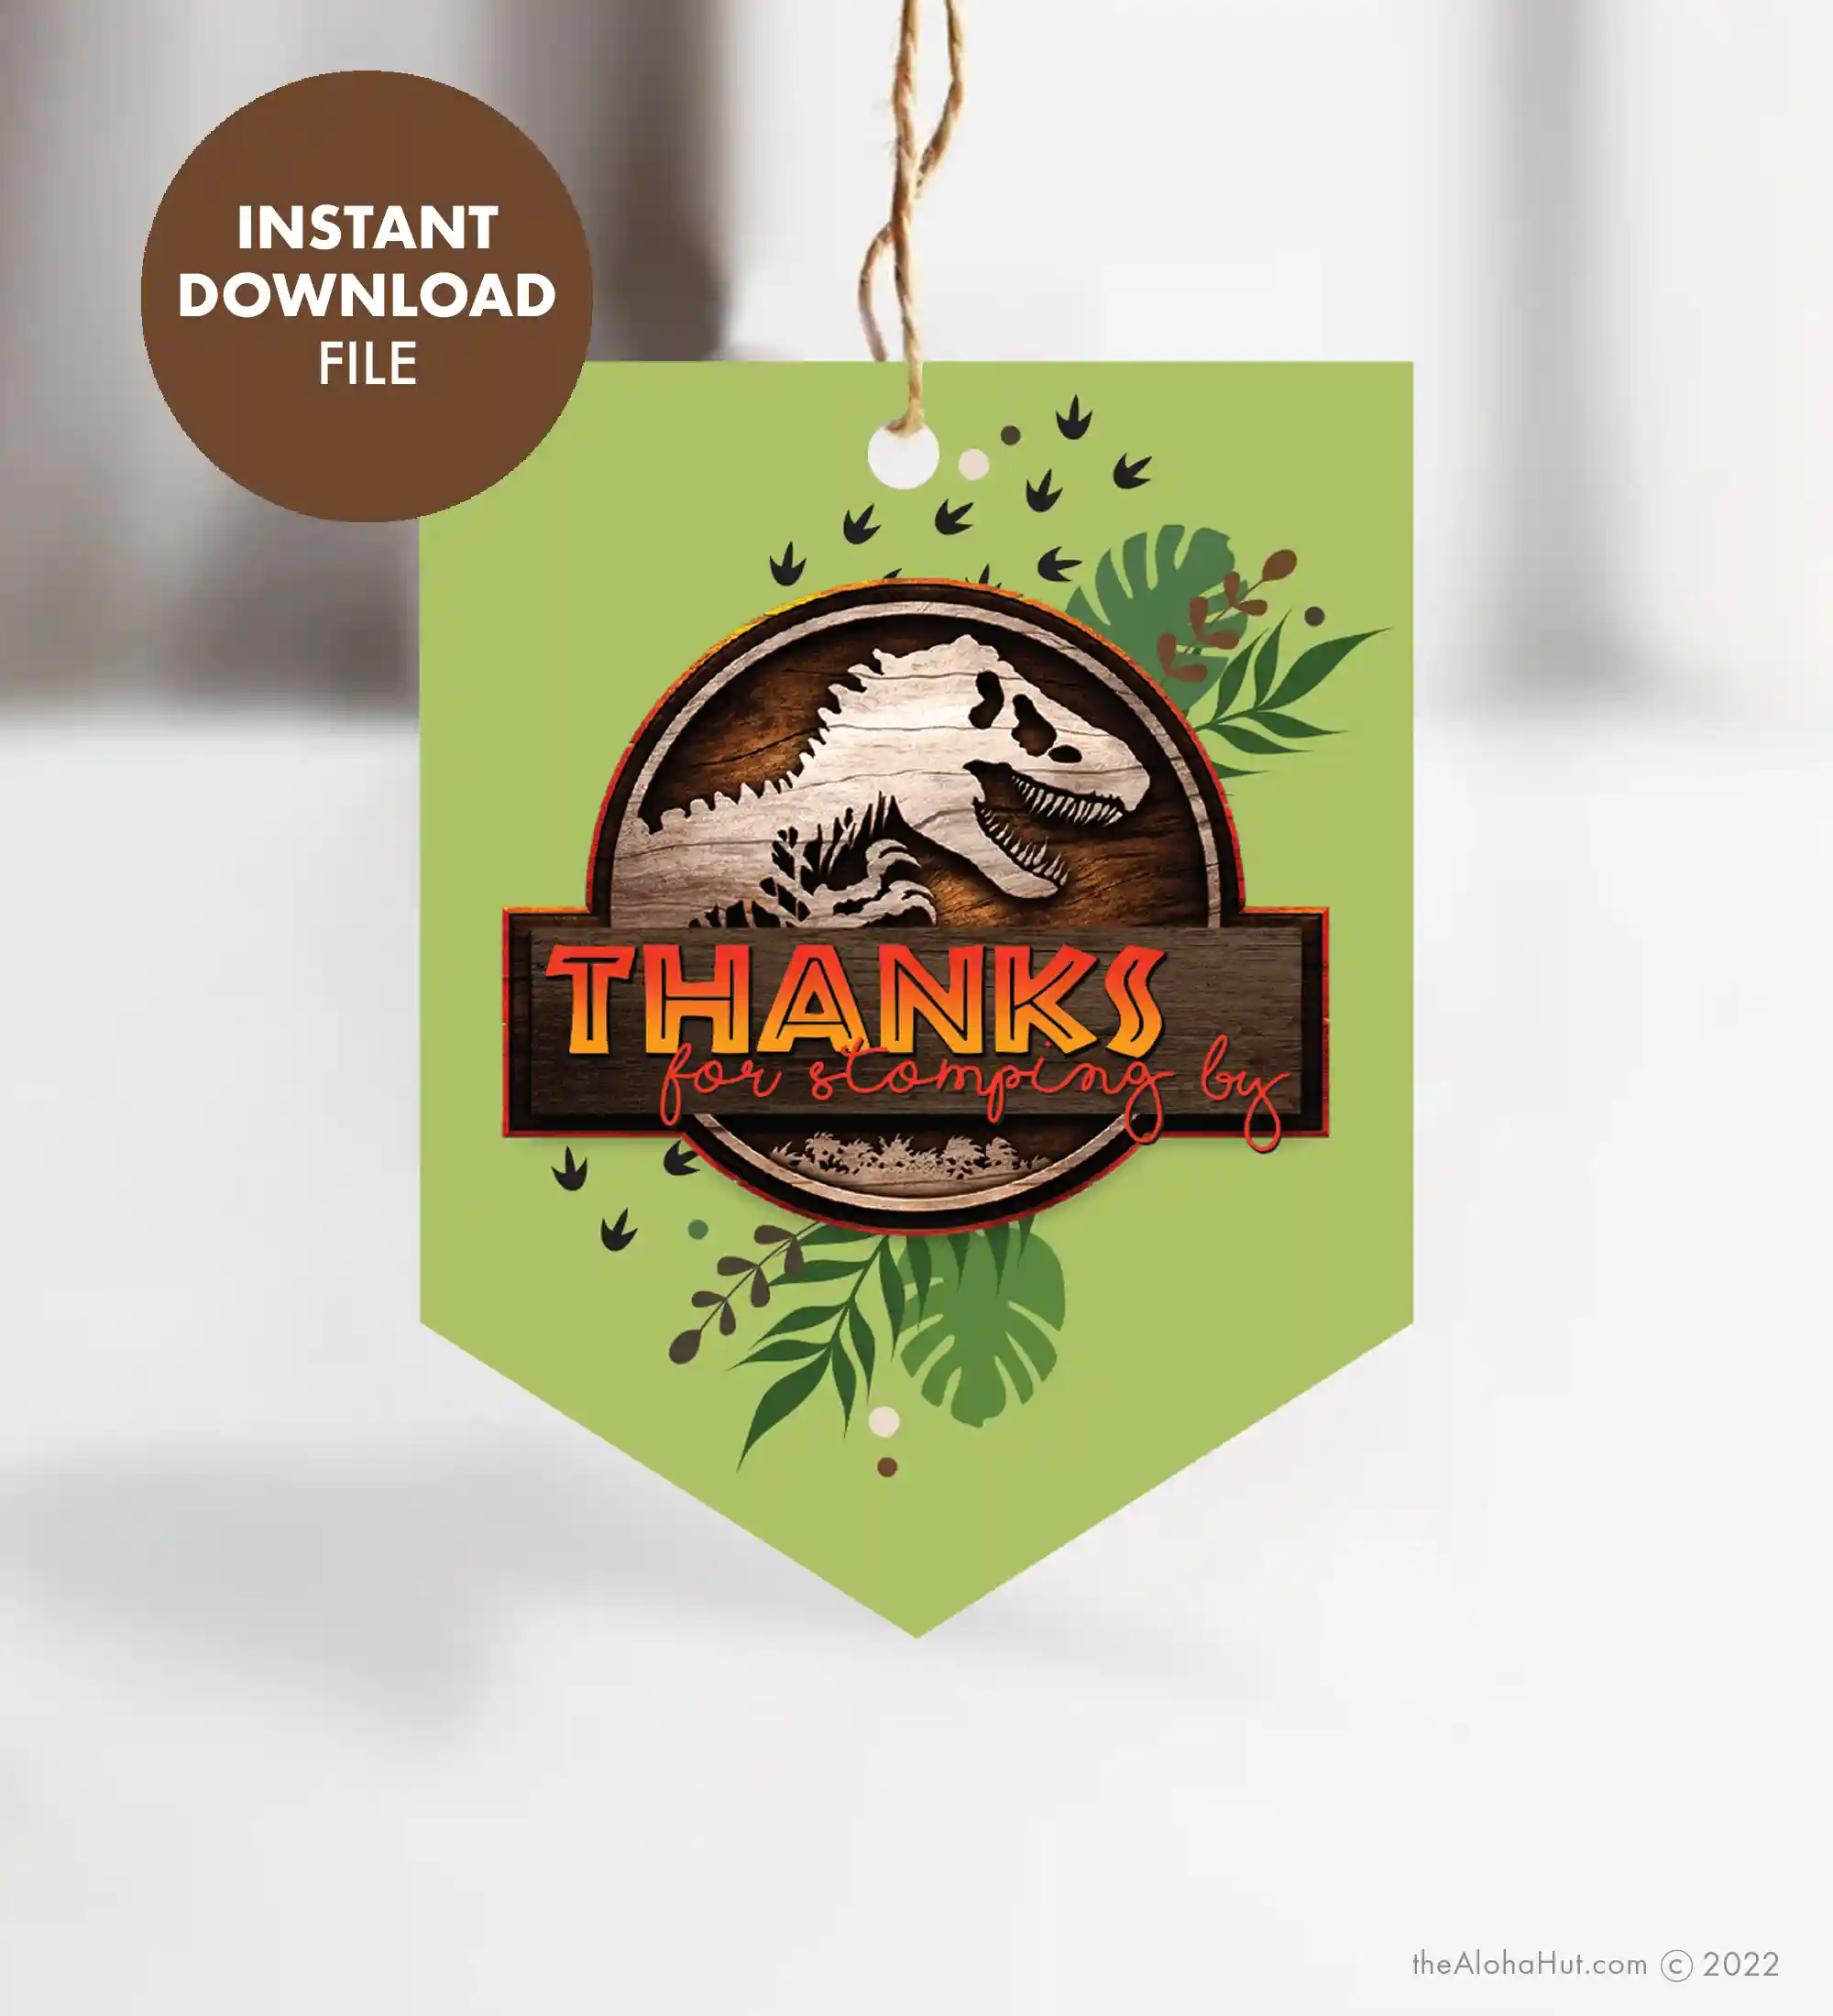 Jurassic World Camp Cretaceous Party Ideas - Dinosaur Party Ideas - free printable party decor & games - party favor tag